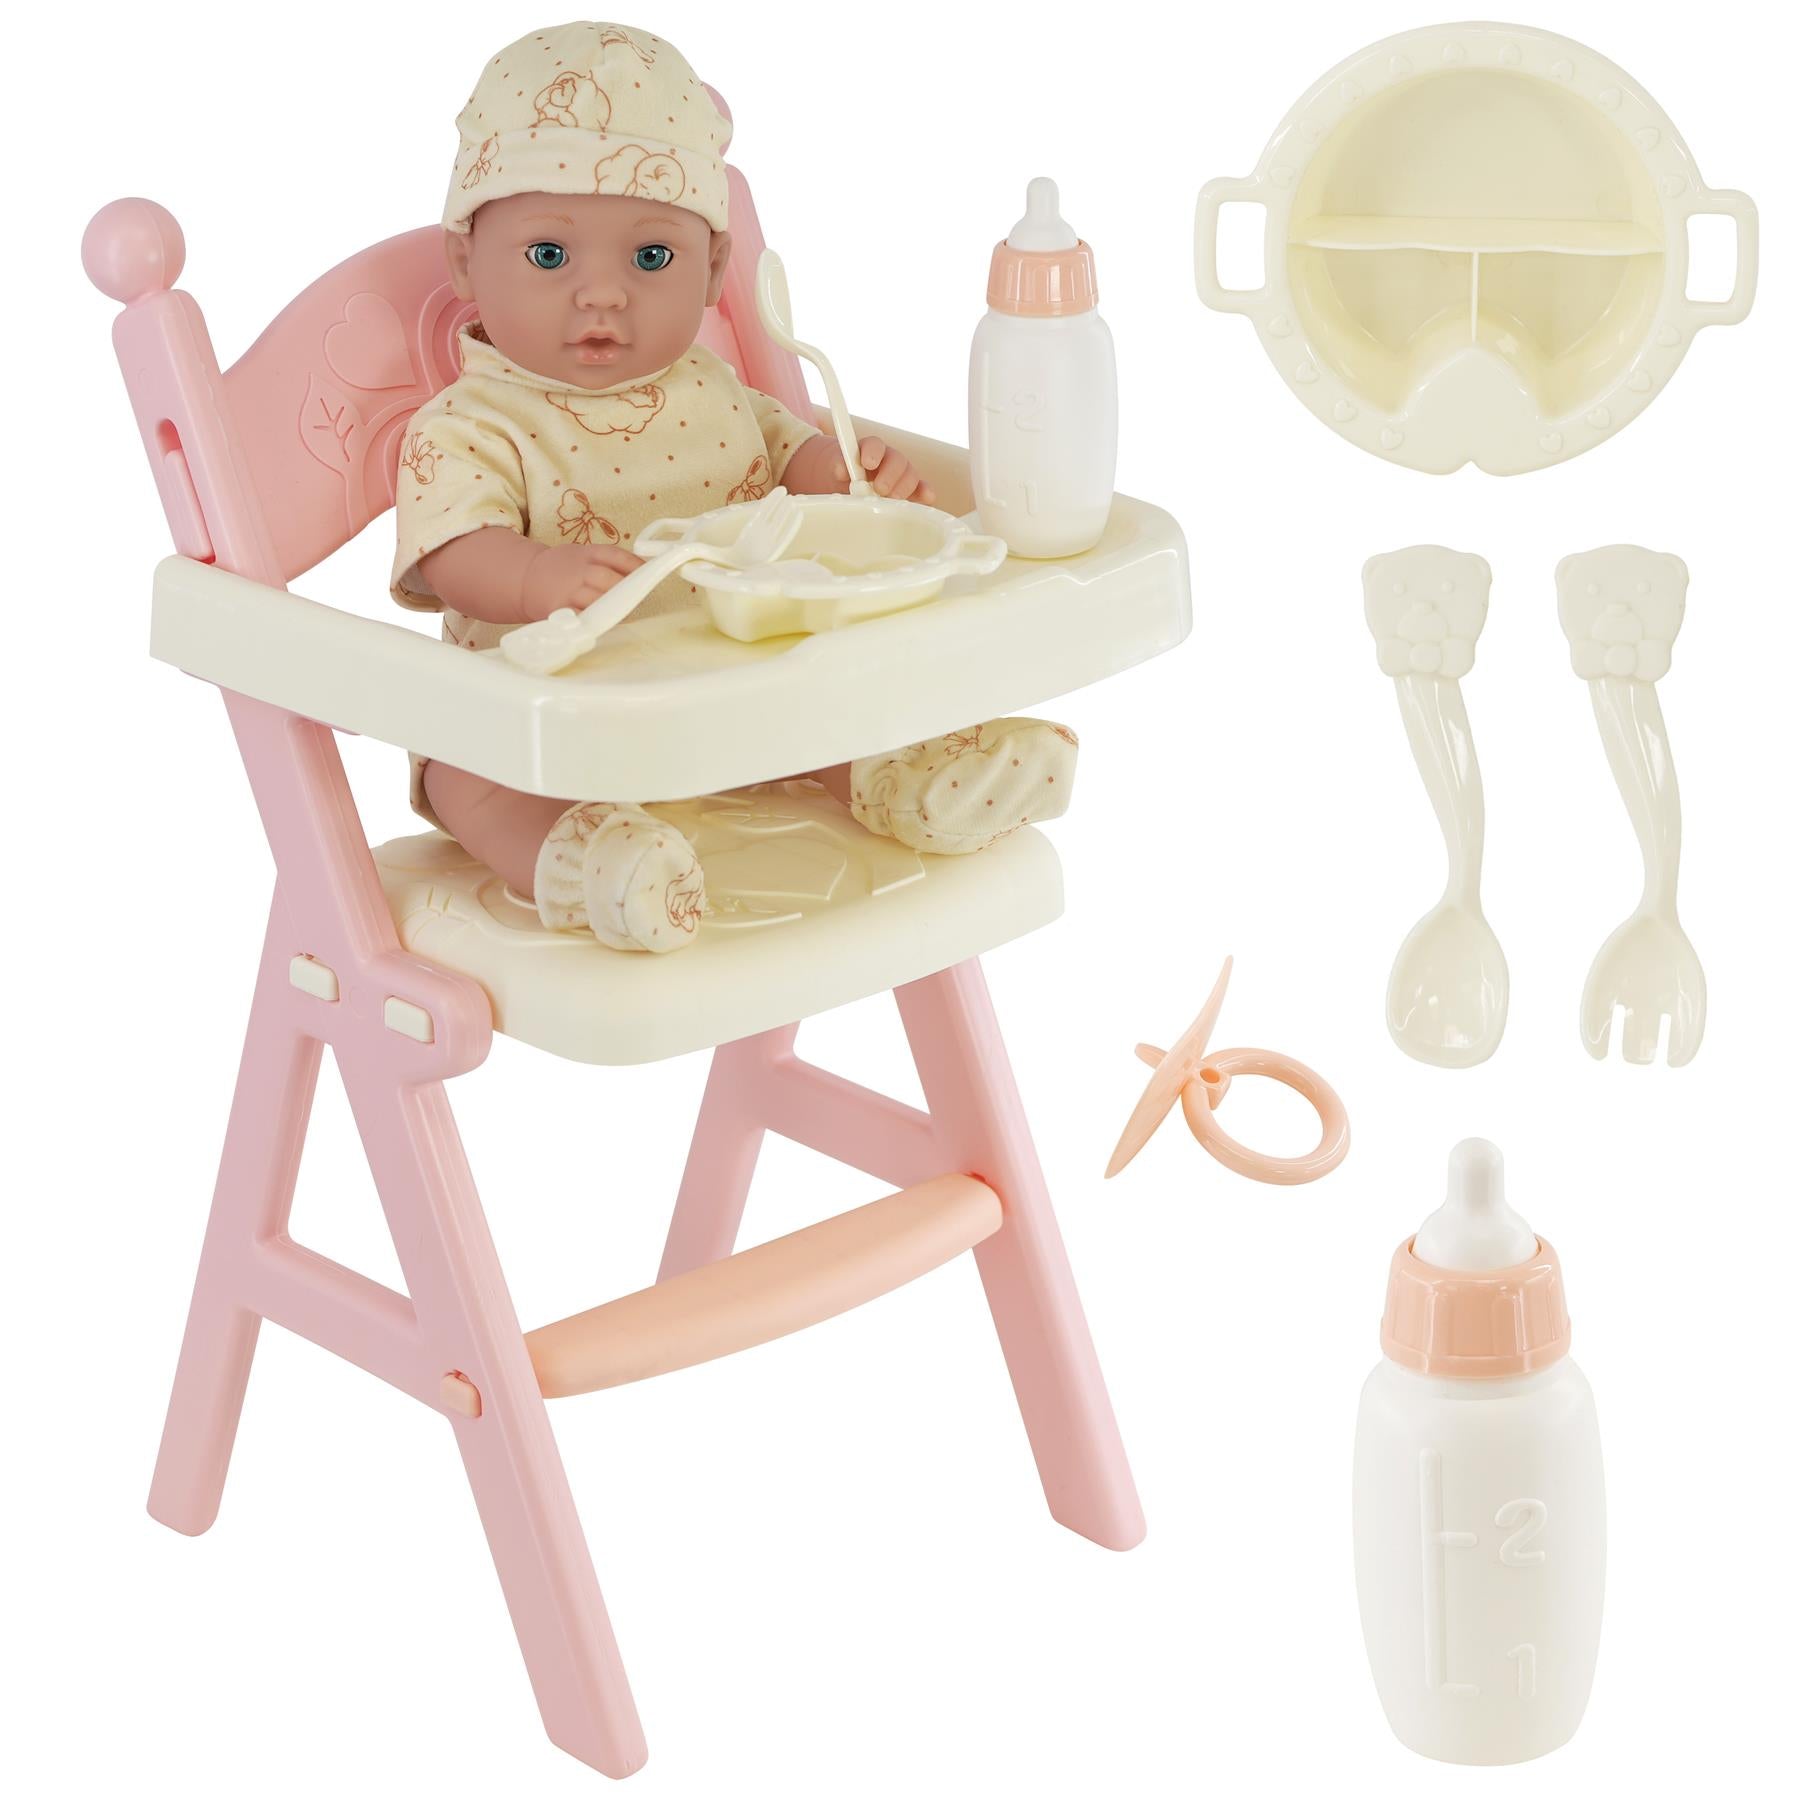 BiBi Doll Furniture, Stroller, Bedding, Feeding Accessories Baby Doll Care  Set